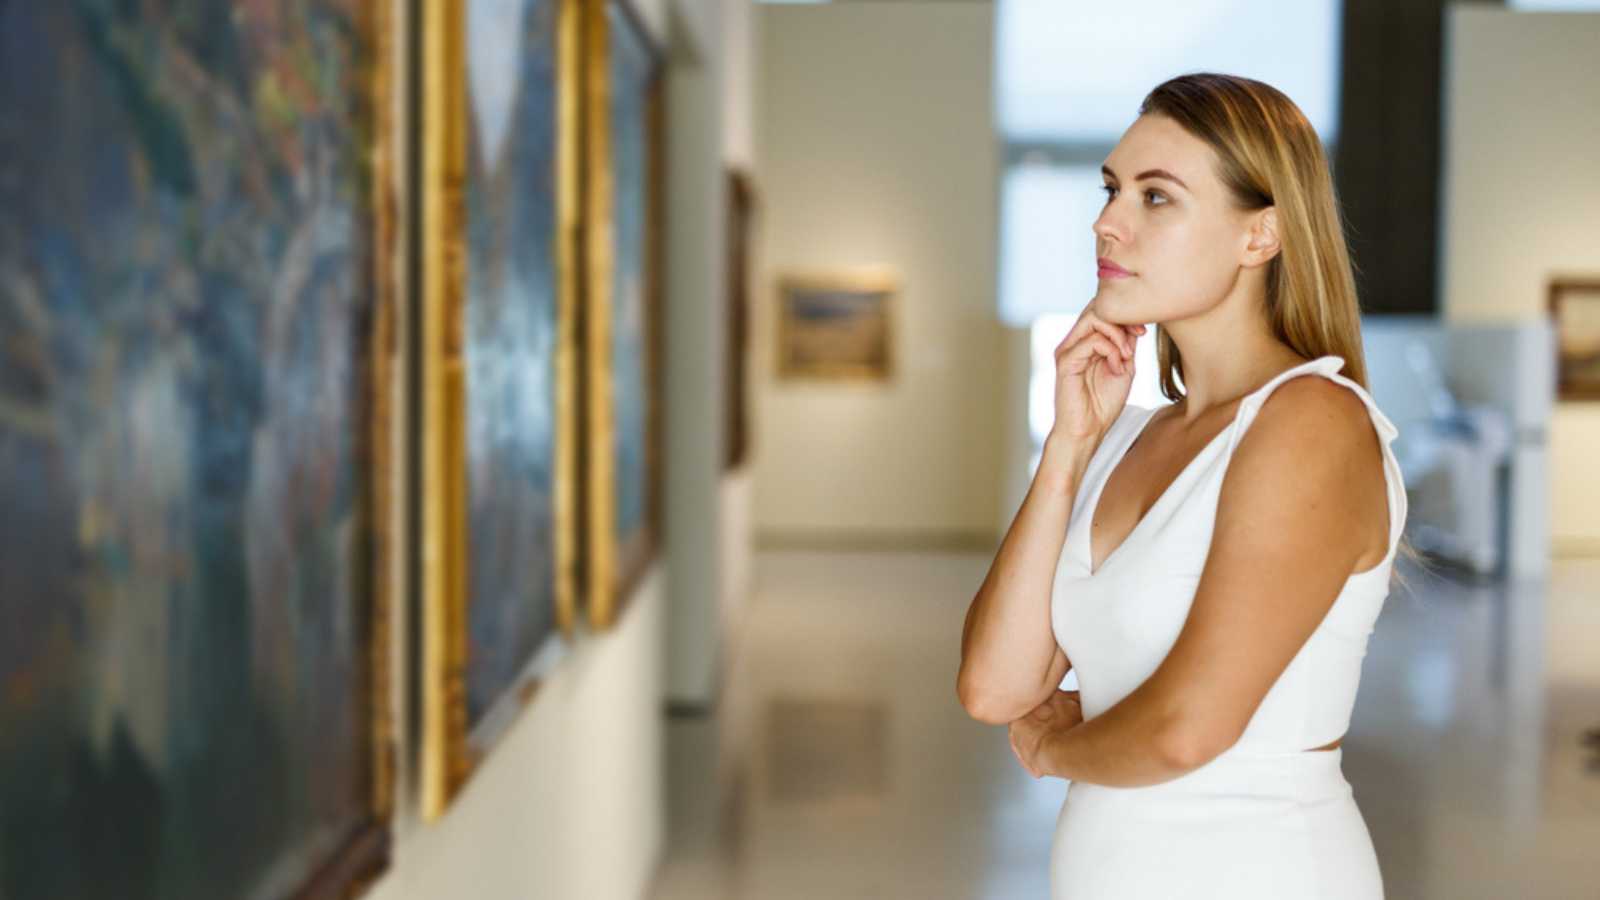 Woman Looking At Painting And Thinking